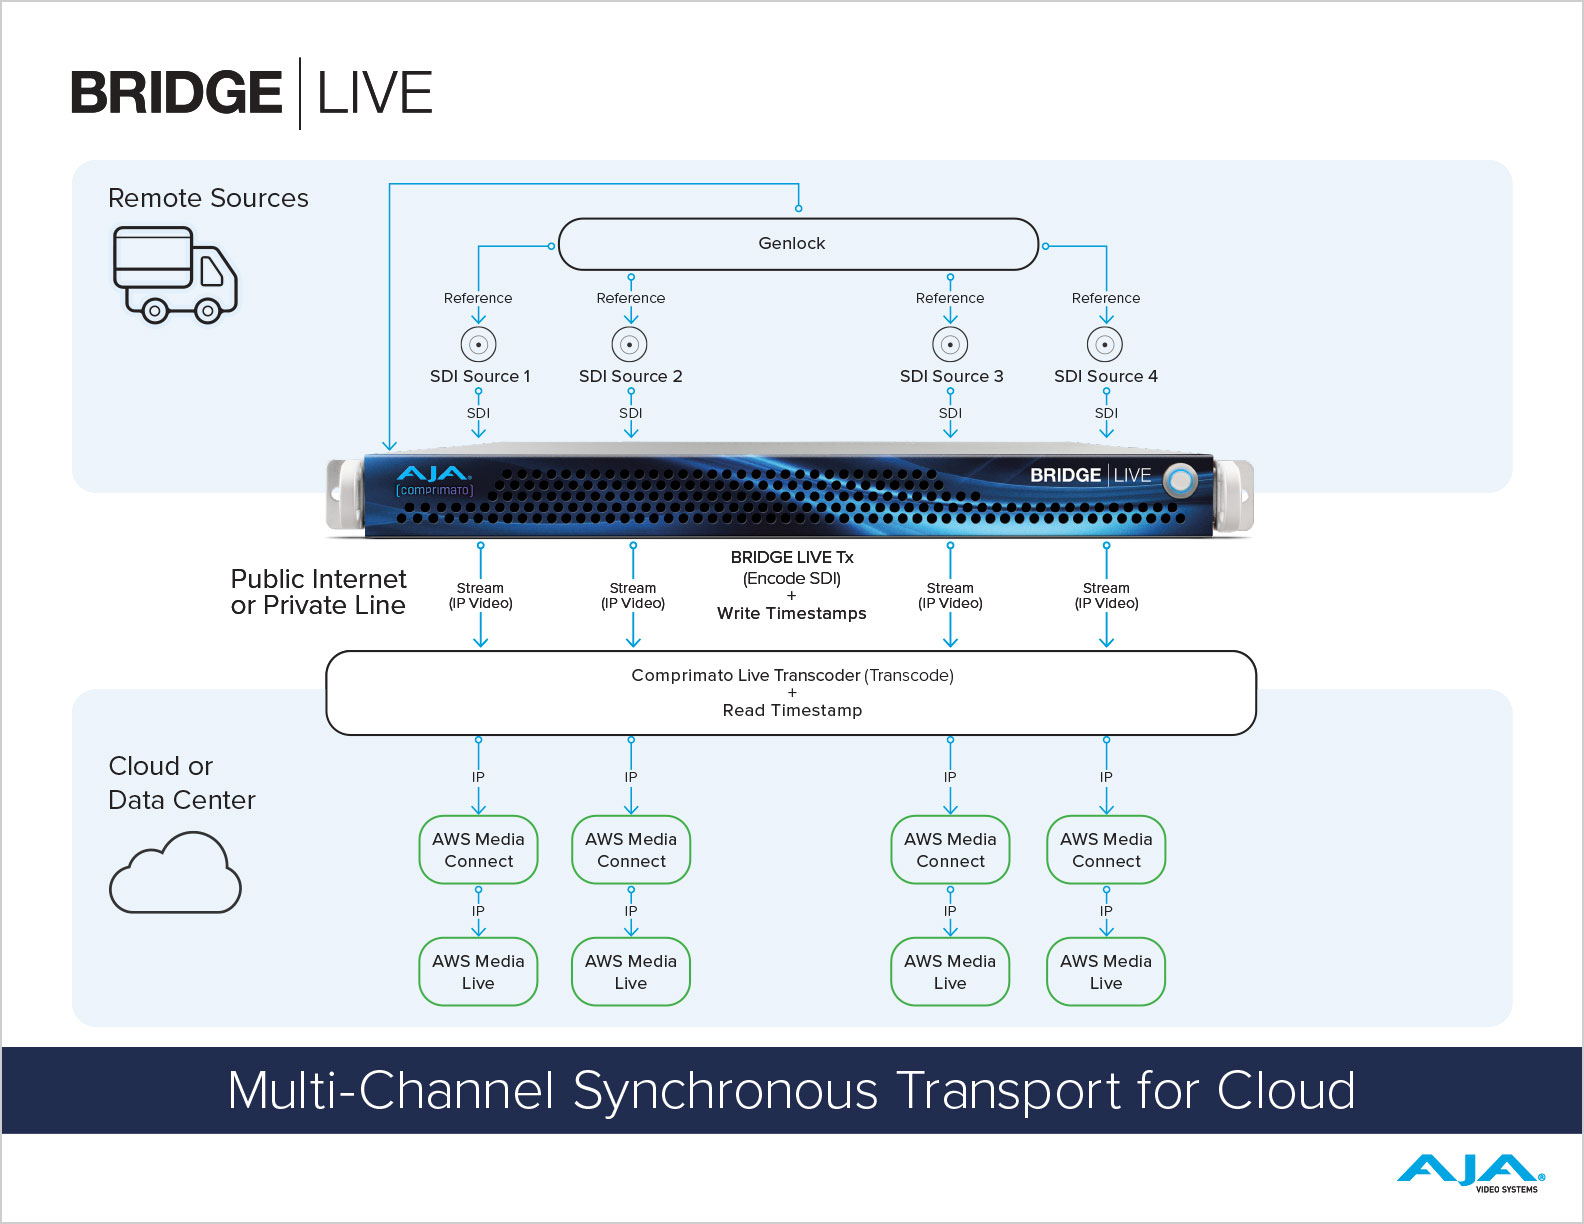 5635 AJA BRIDGE LIVE Multi Sync trans cloud